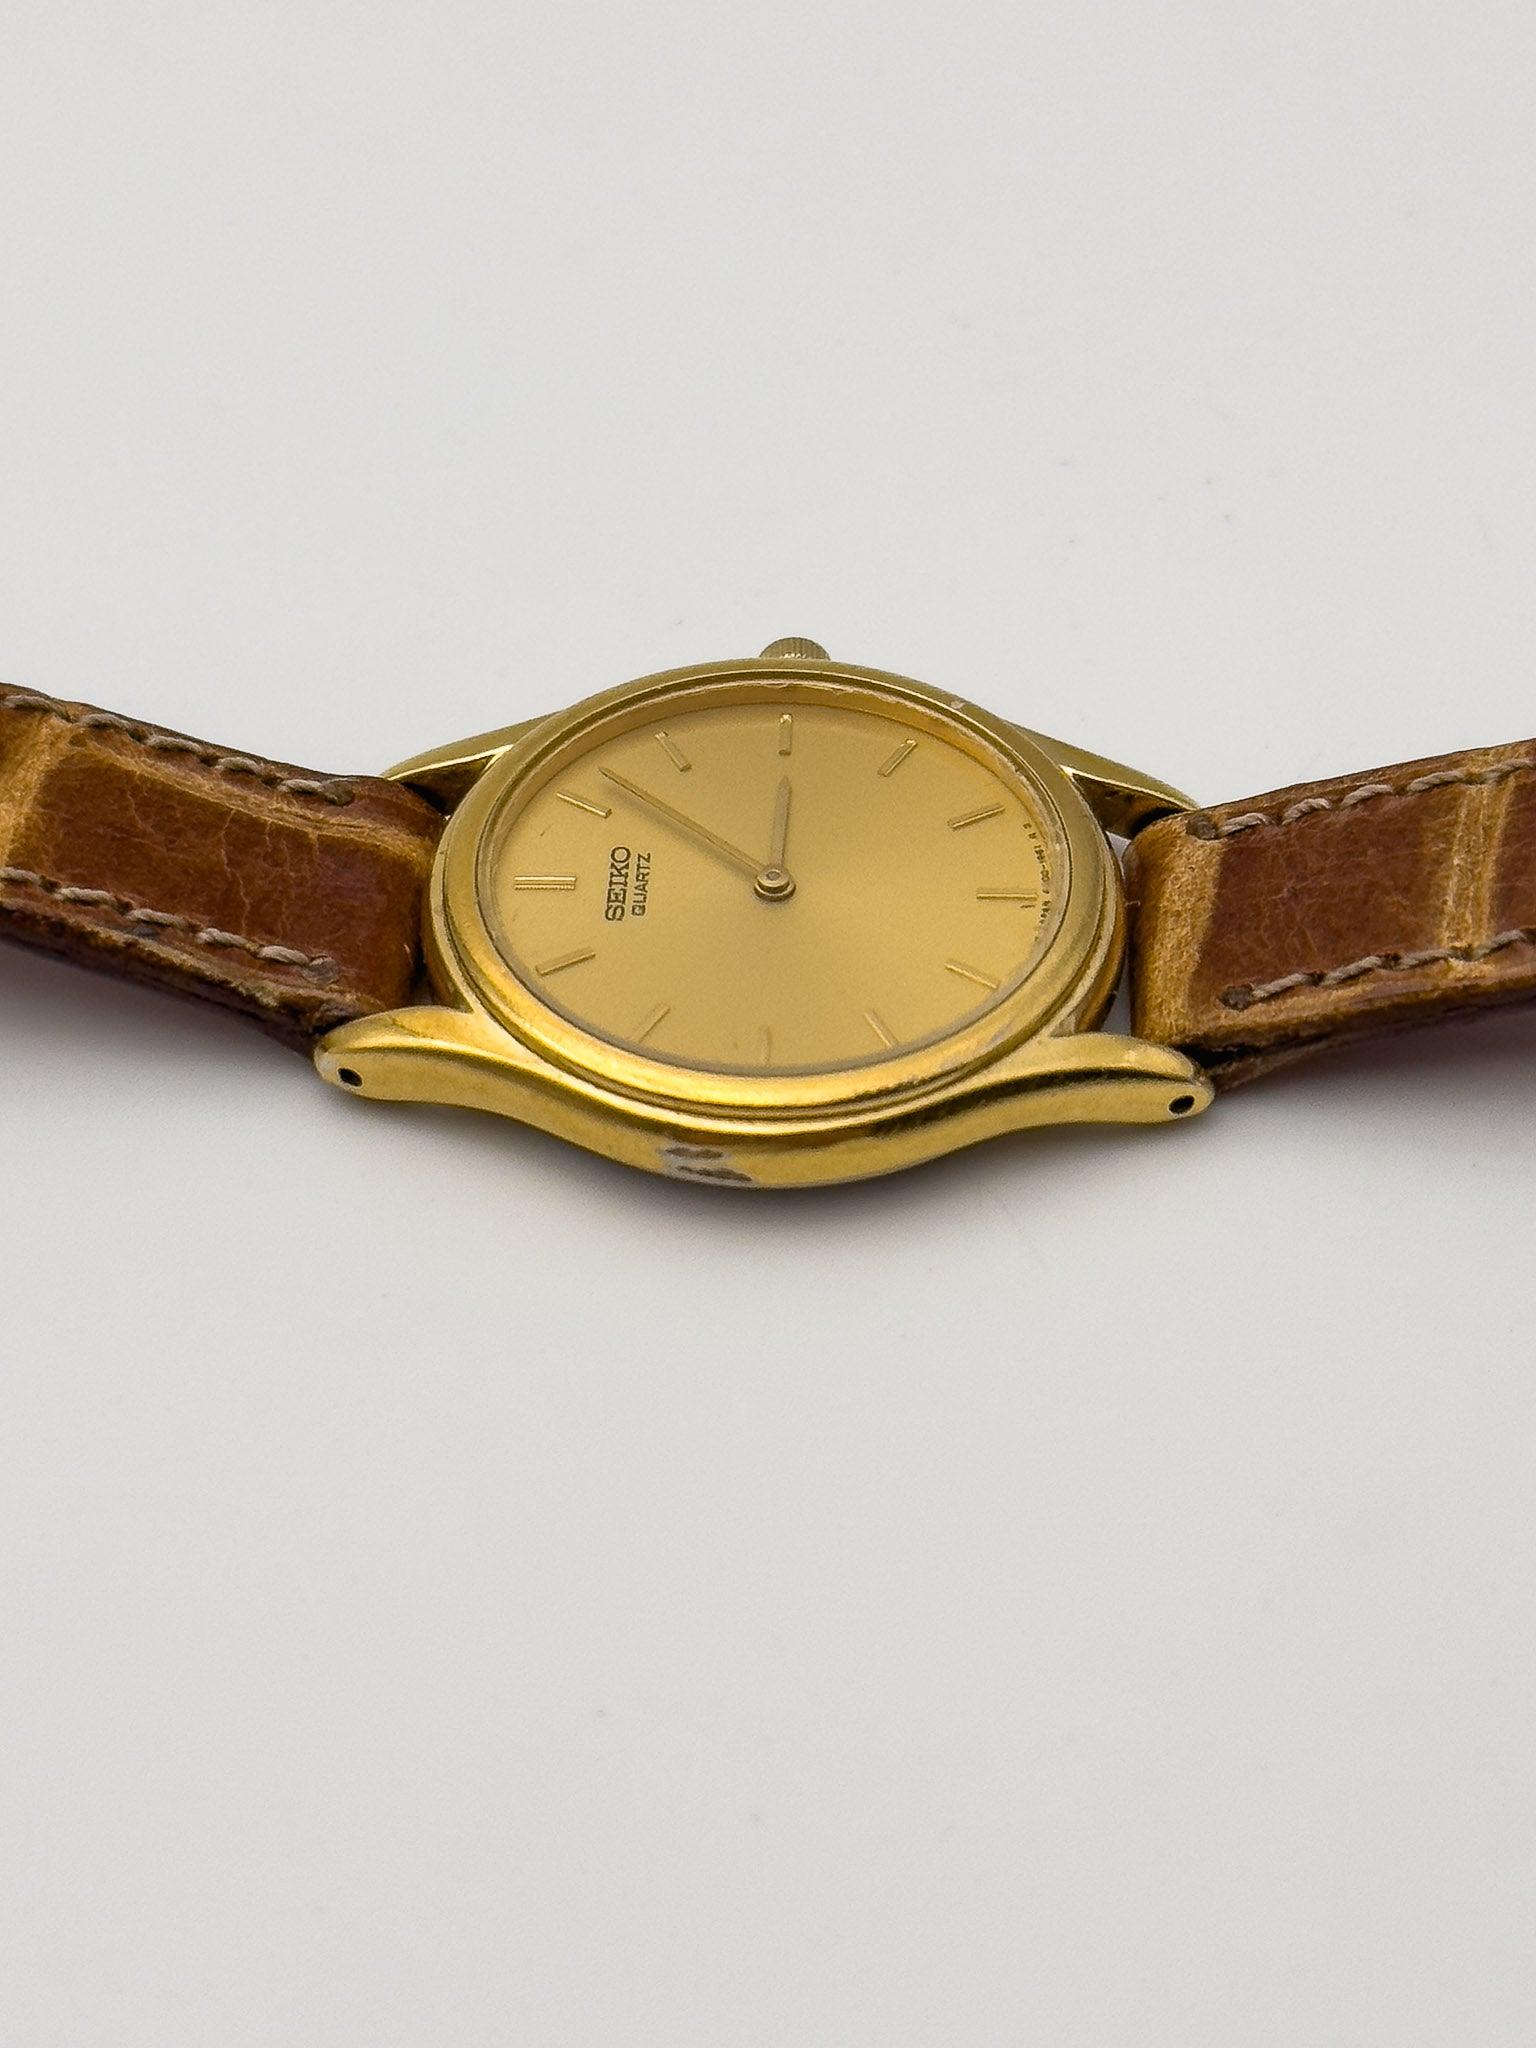 Seiko - Mini Gold Dress Watch - 1972 - Atelier Victor